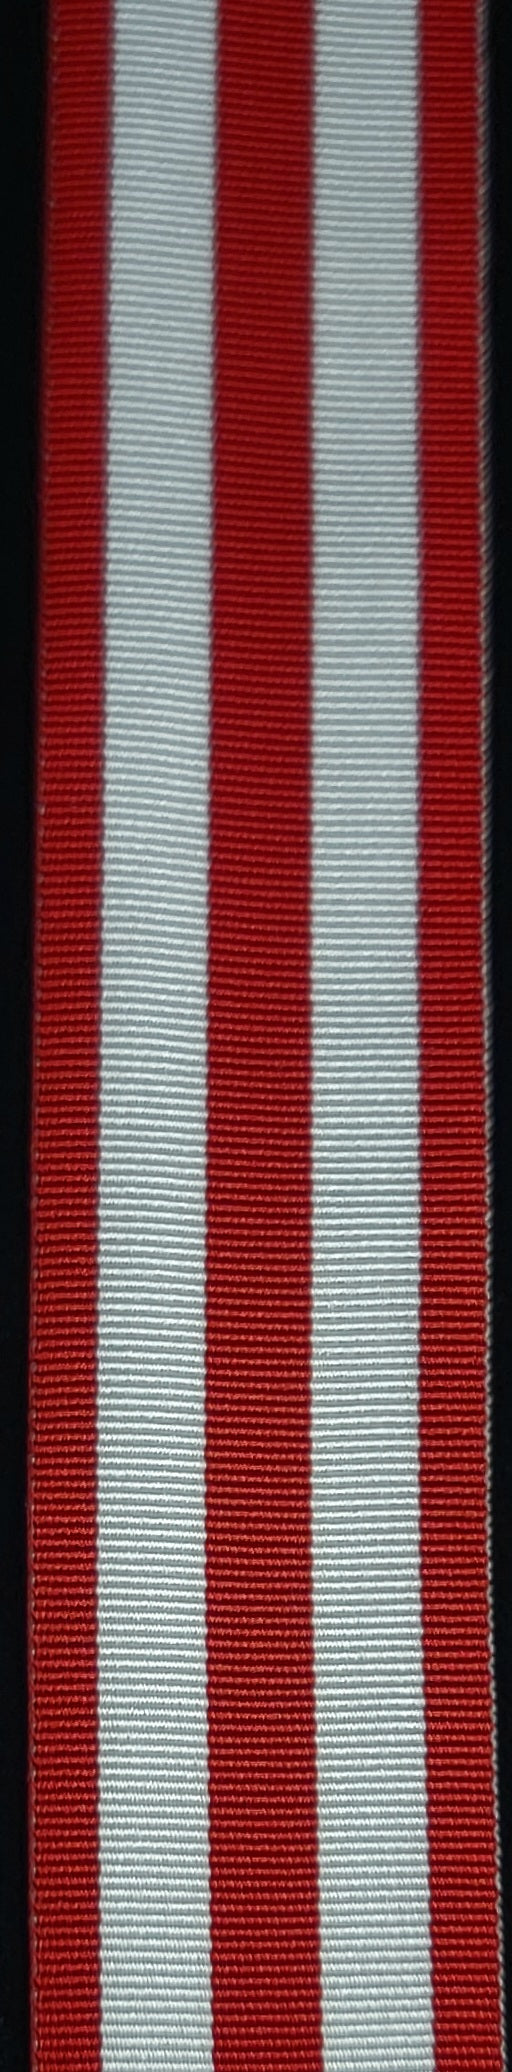 Ribbon, British Columbia Fire Service Bravery Medal